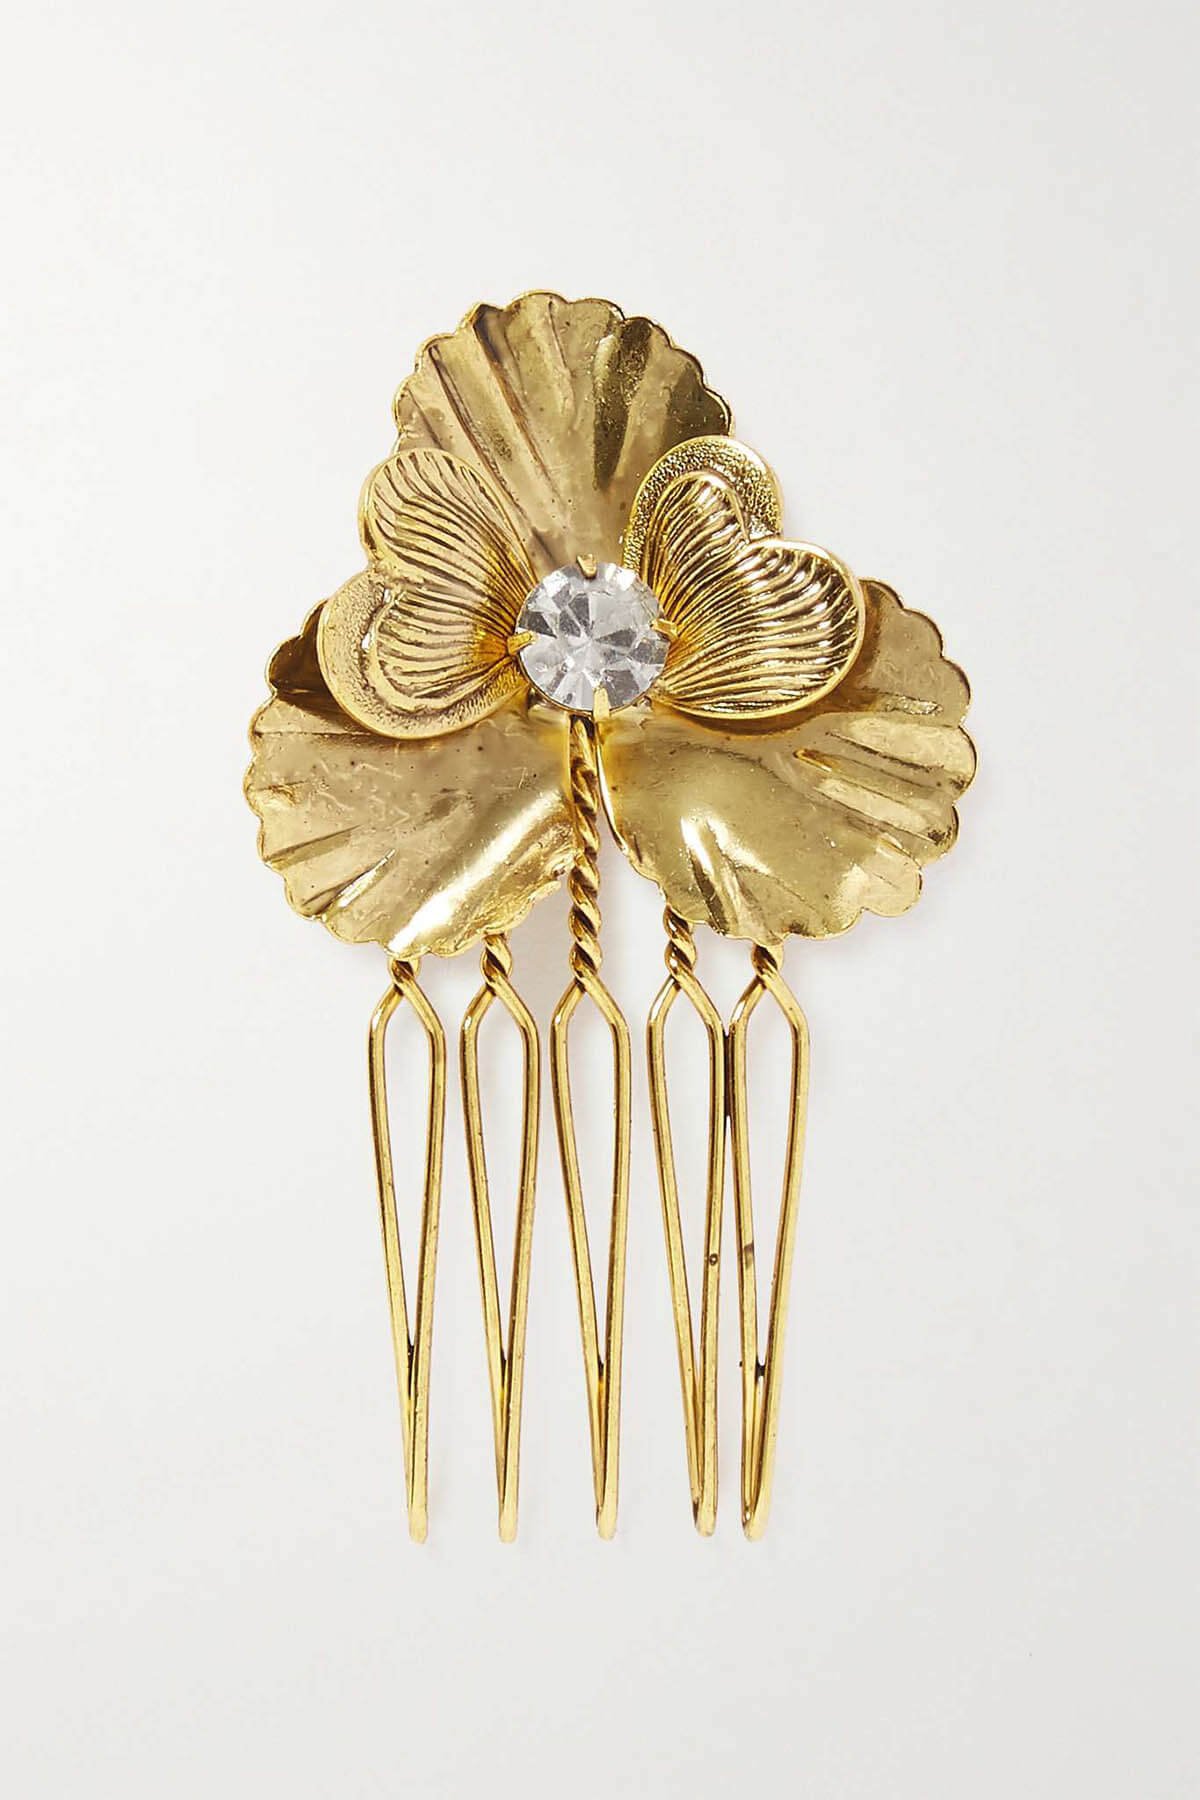 Gold hair accessories wedding pin